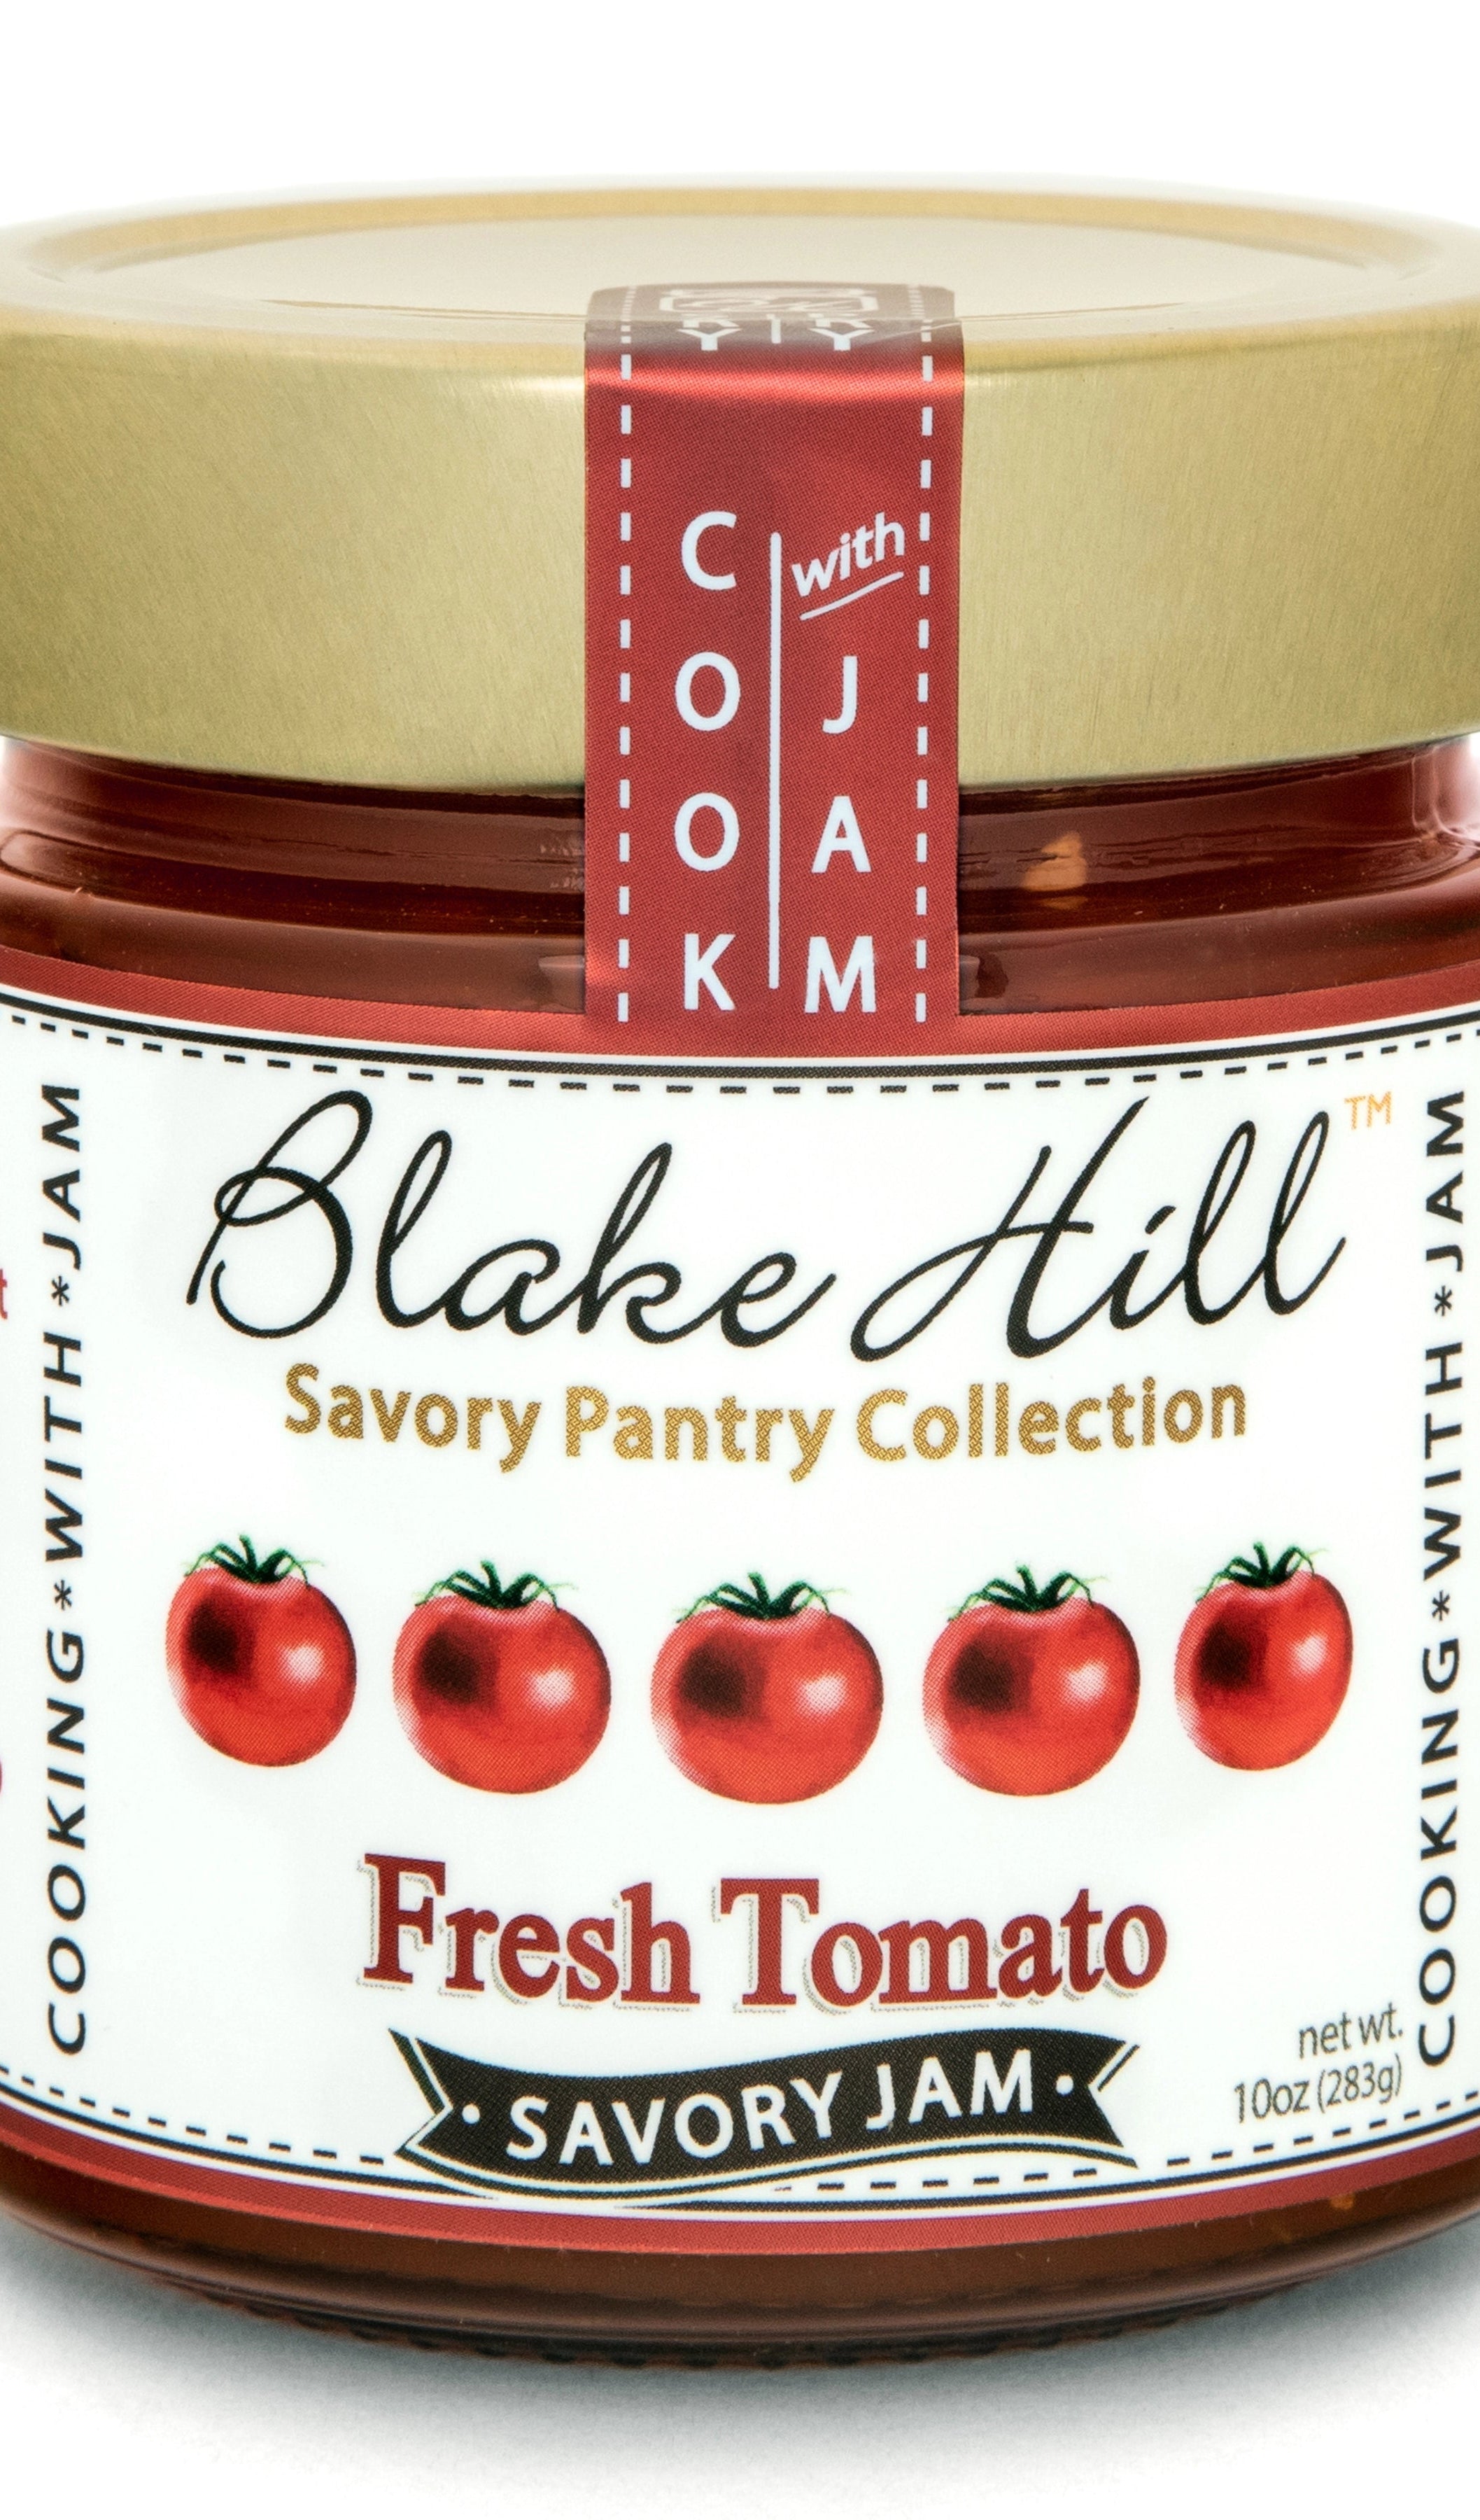 Fresh Tomato Savory Jam | Sudha’s Emporium Gourmet, Gifts & Décor | Corning, NY